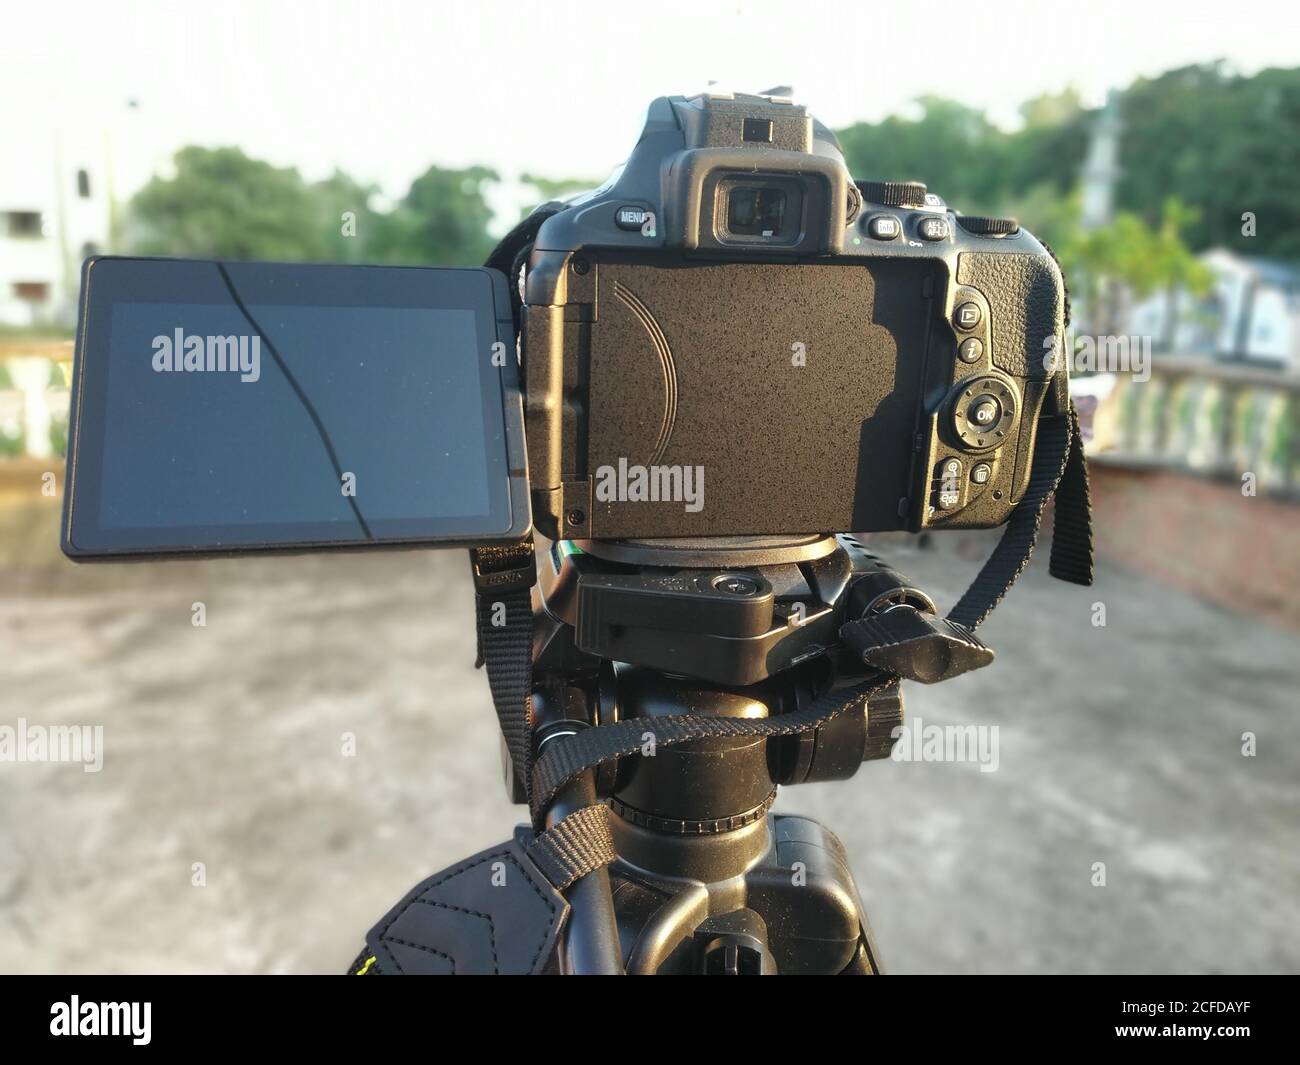 Nikon camera tourist hi-res stock photography and images - Alamy